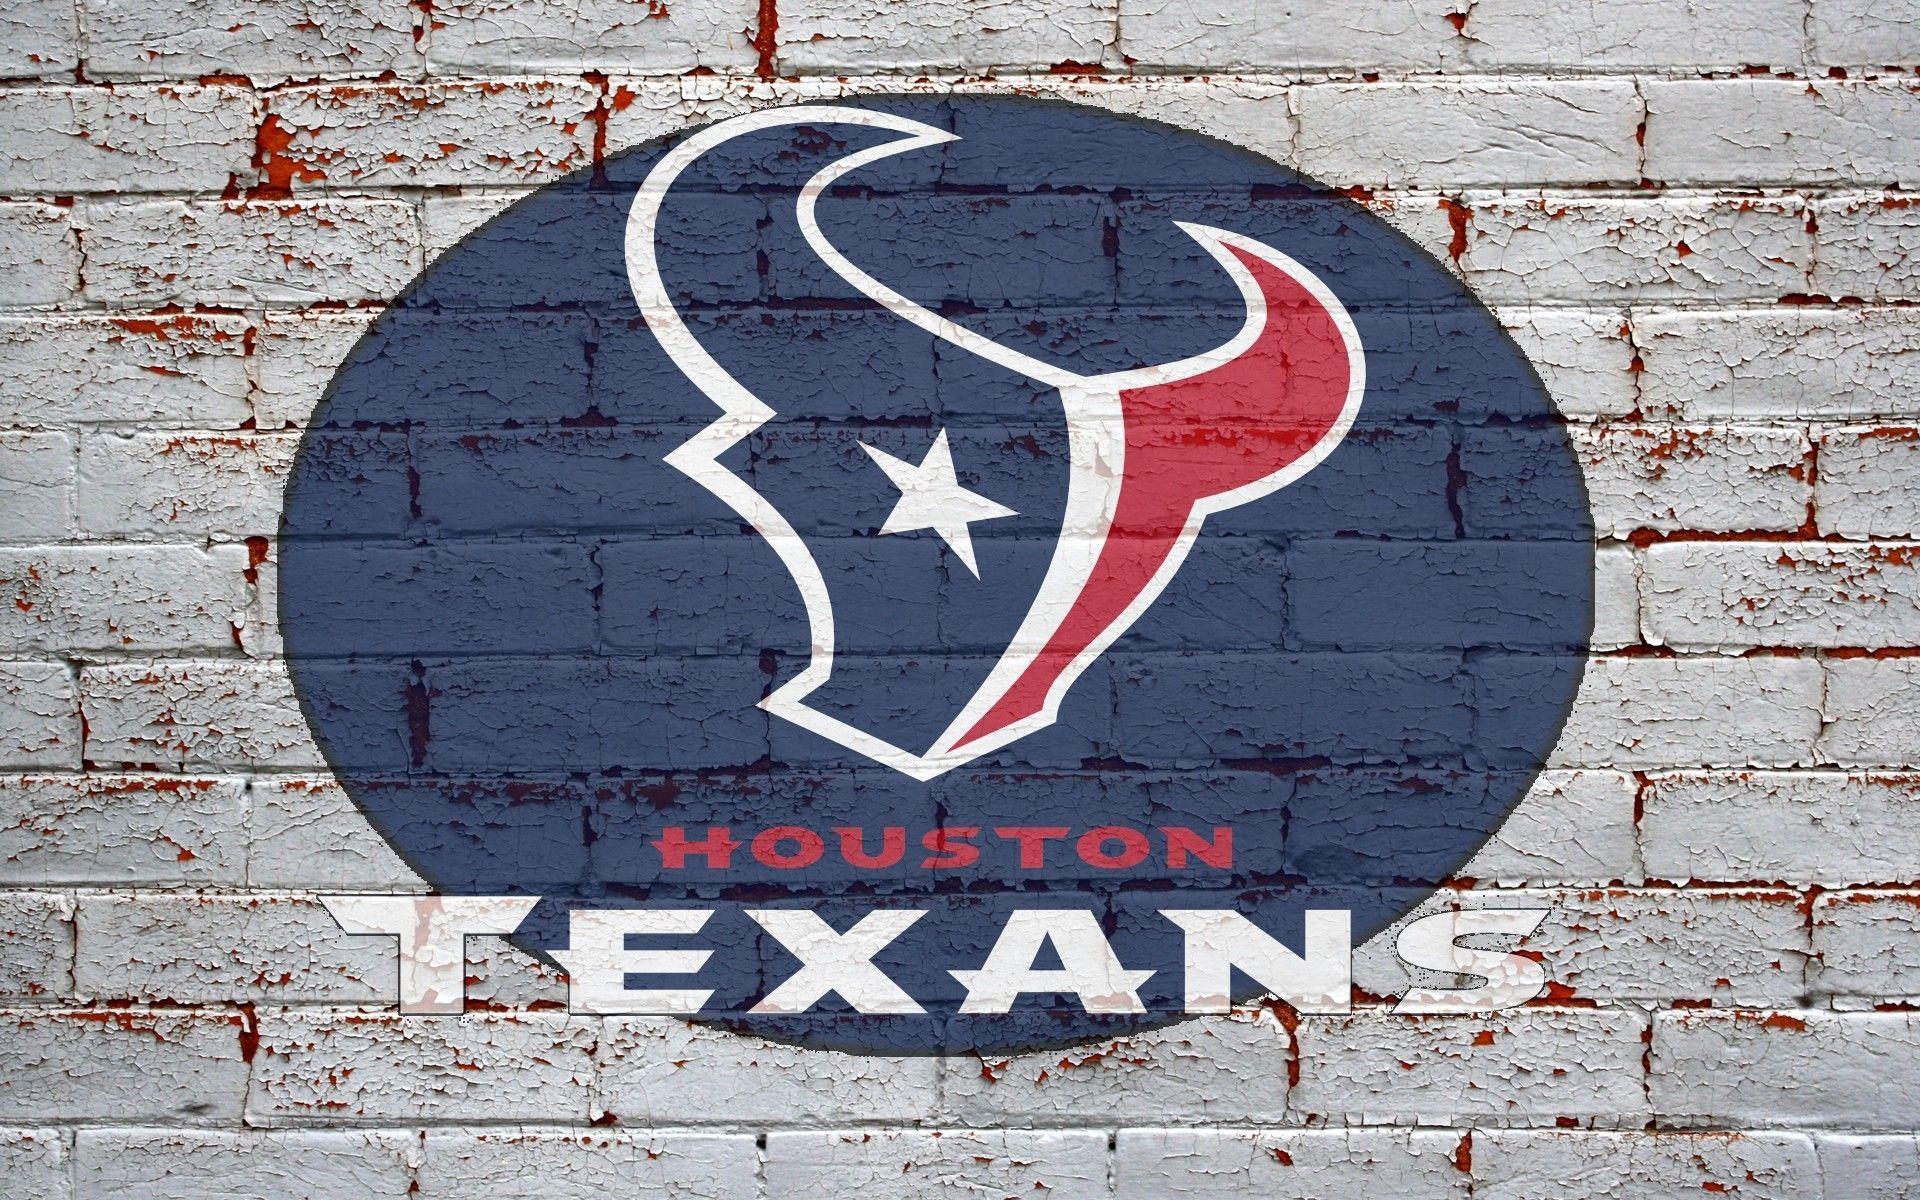 Houston Texans Wallpaper Archives.com